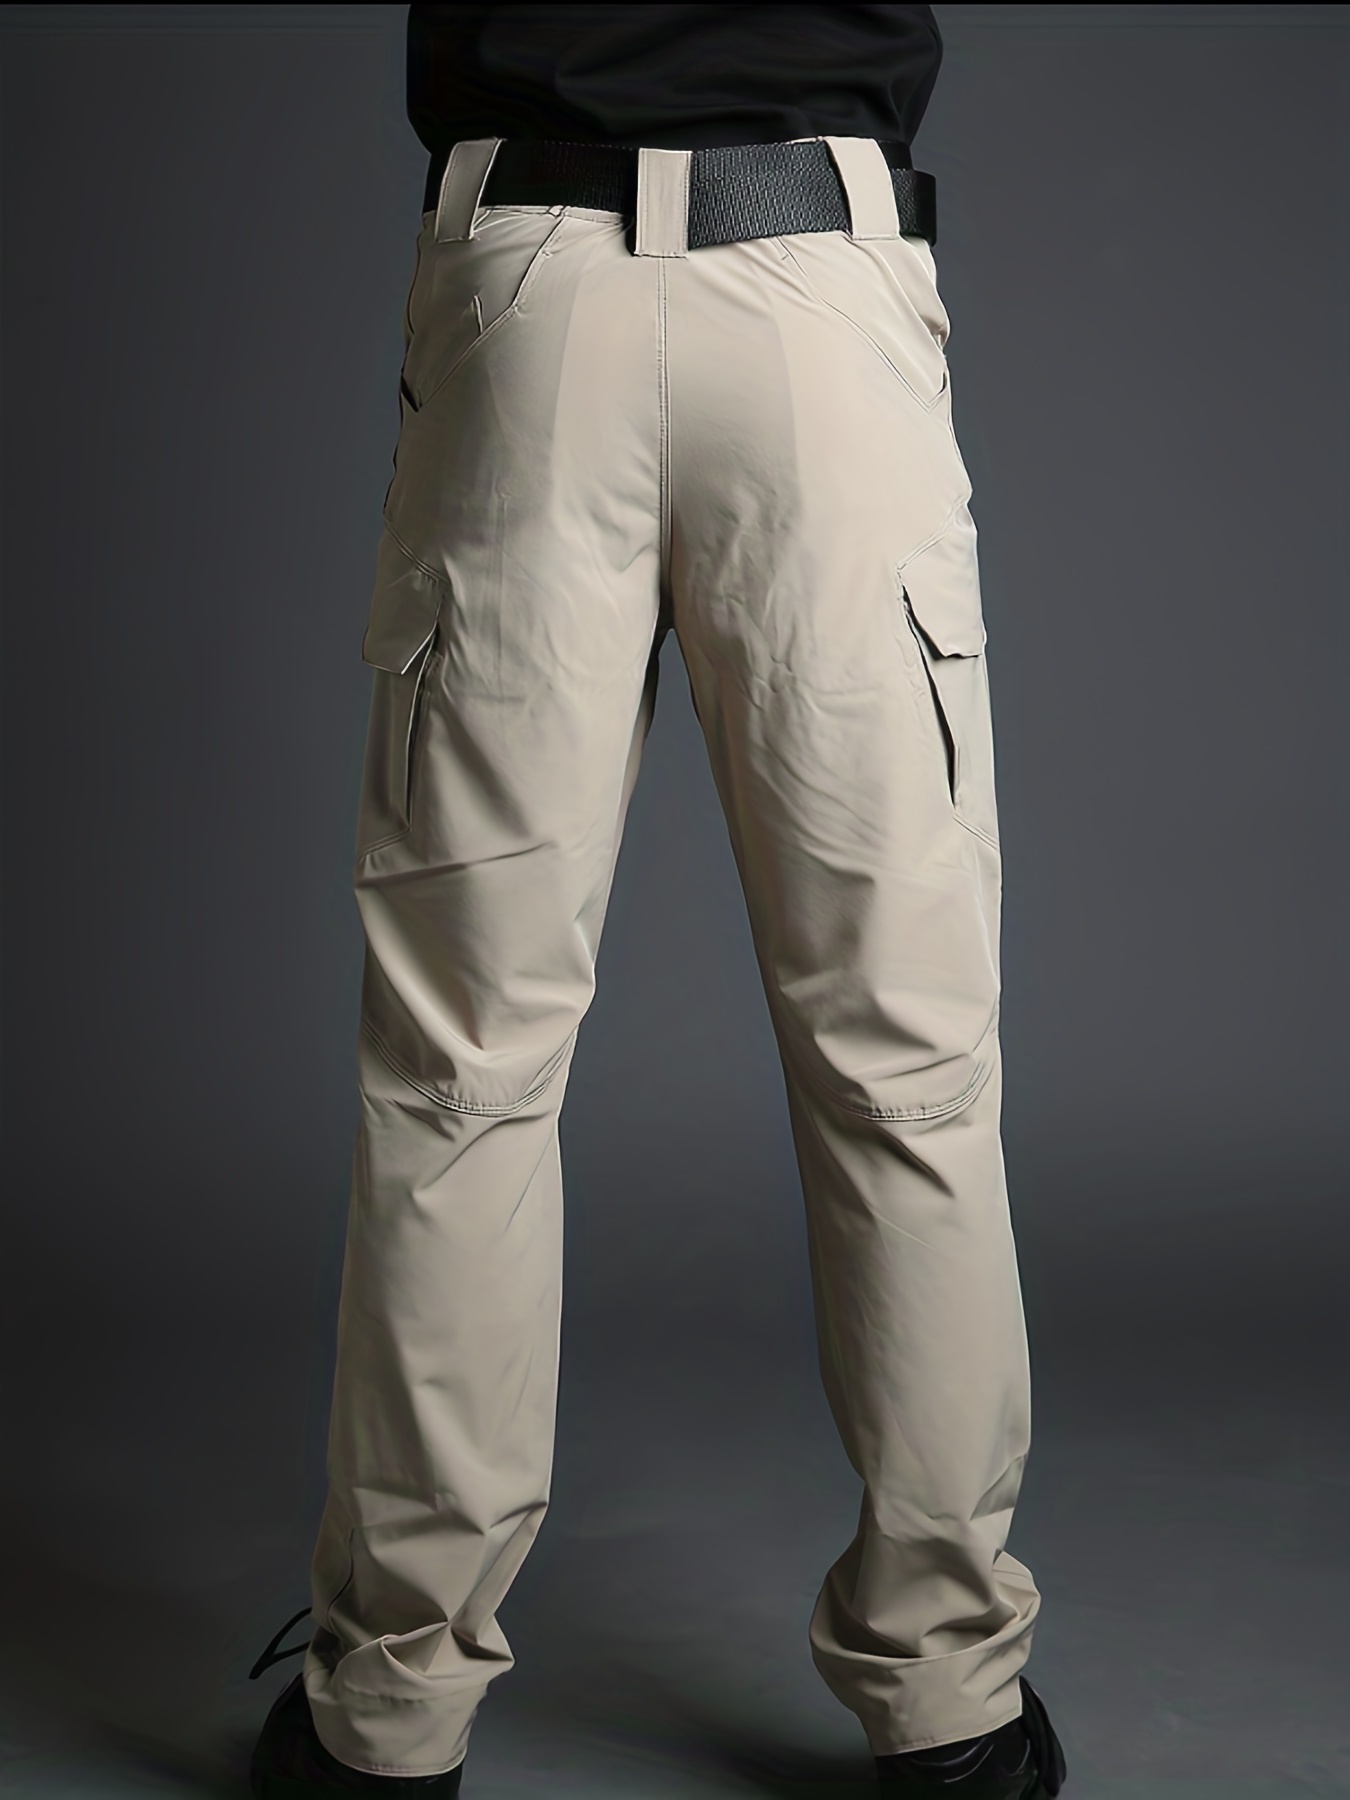 Pantalon Antiarrugas Transpirable Senderismo Hombre 609